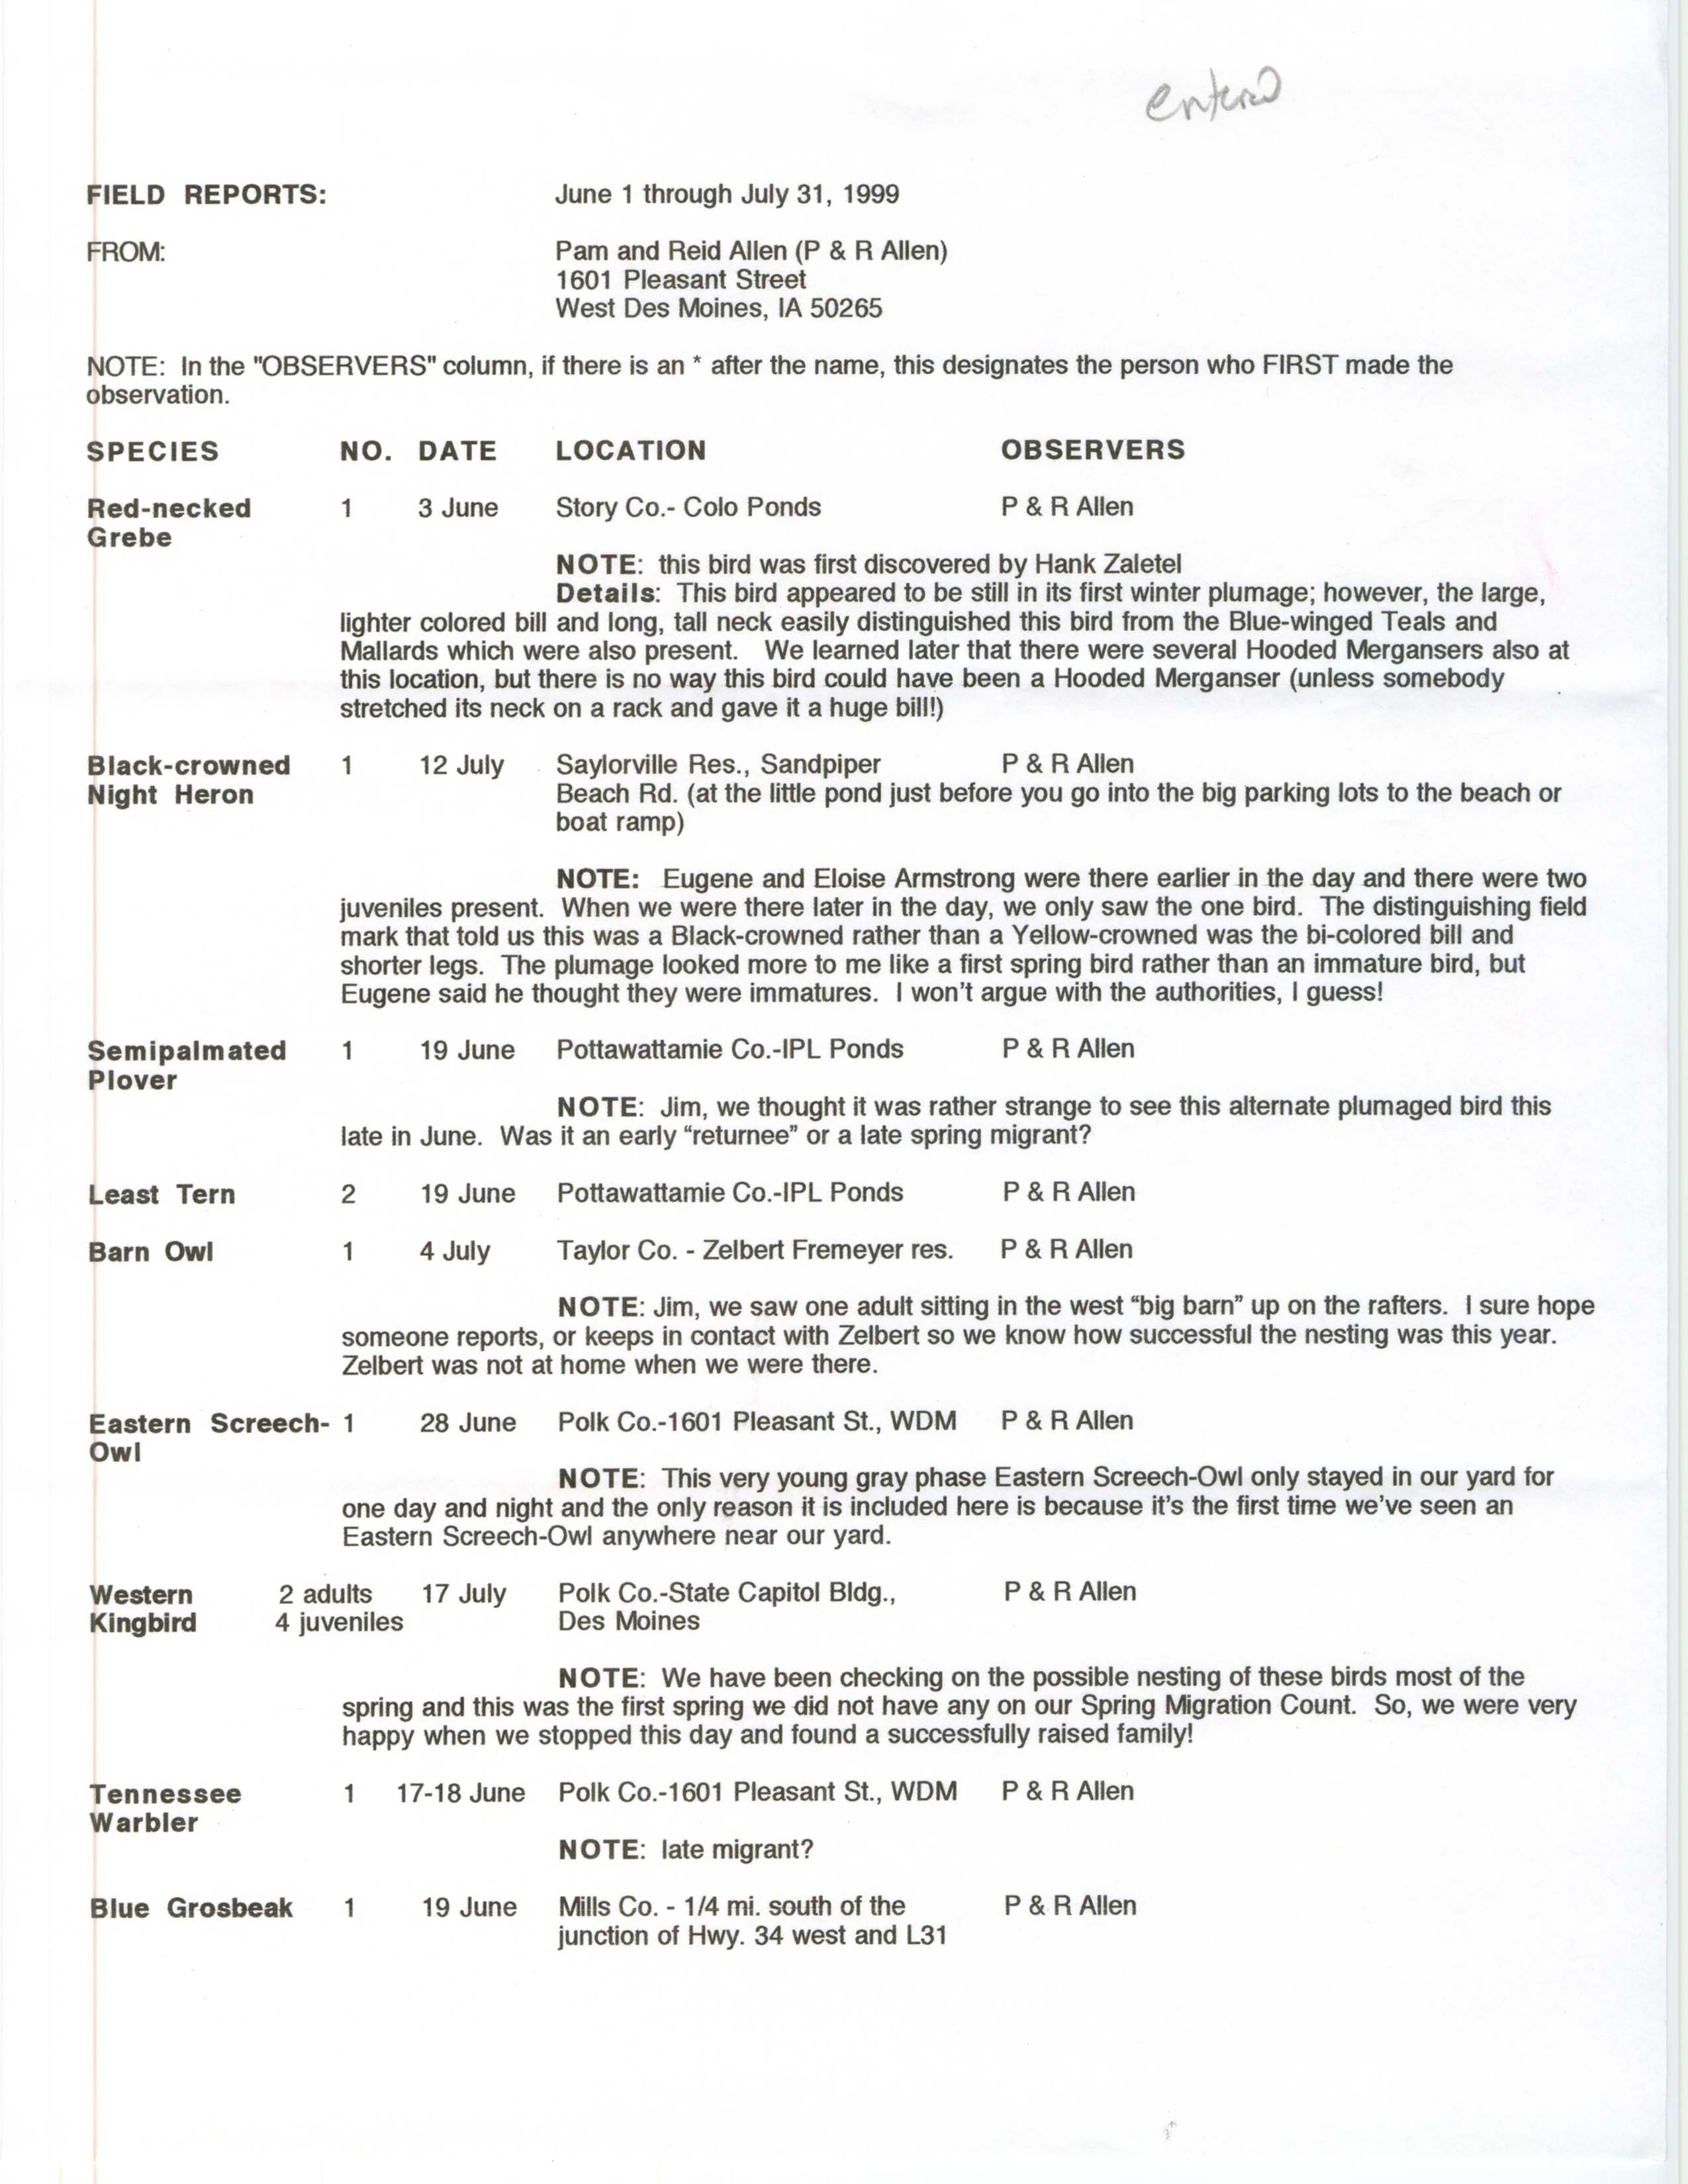 Field reports, June 1 through July 31, 1999, Pam and Reid Allen